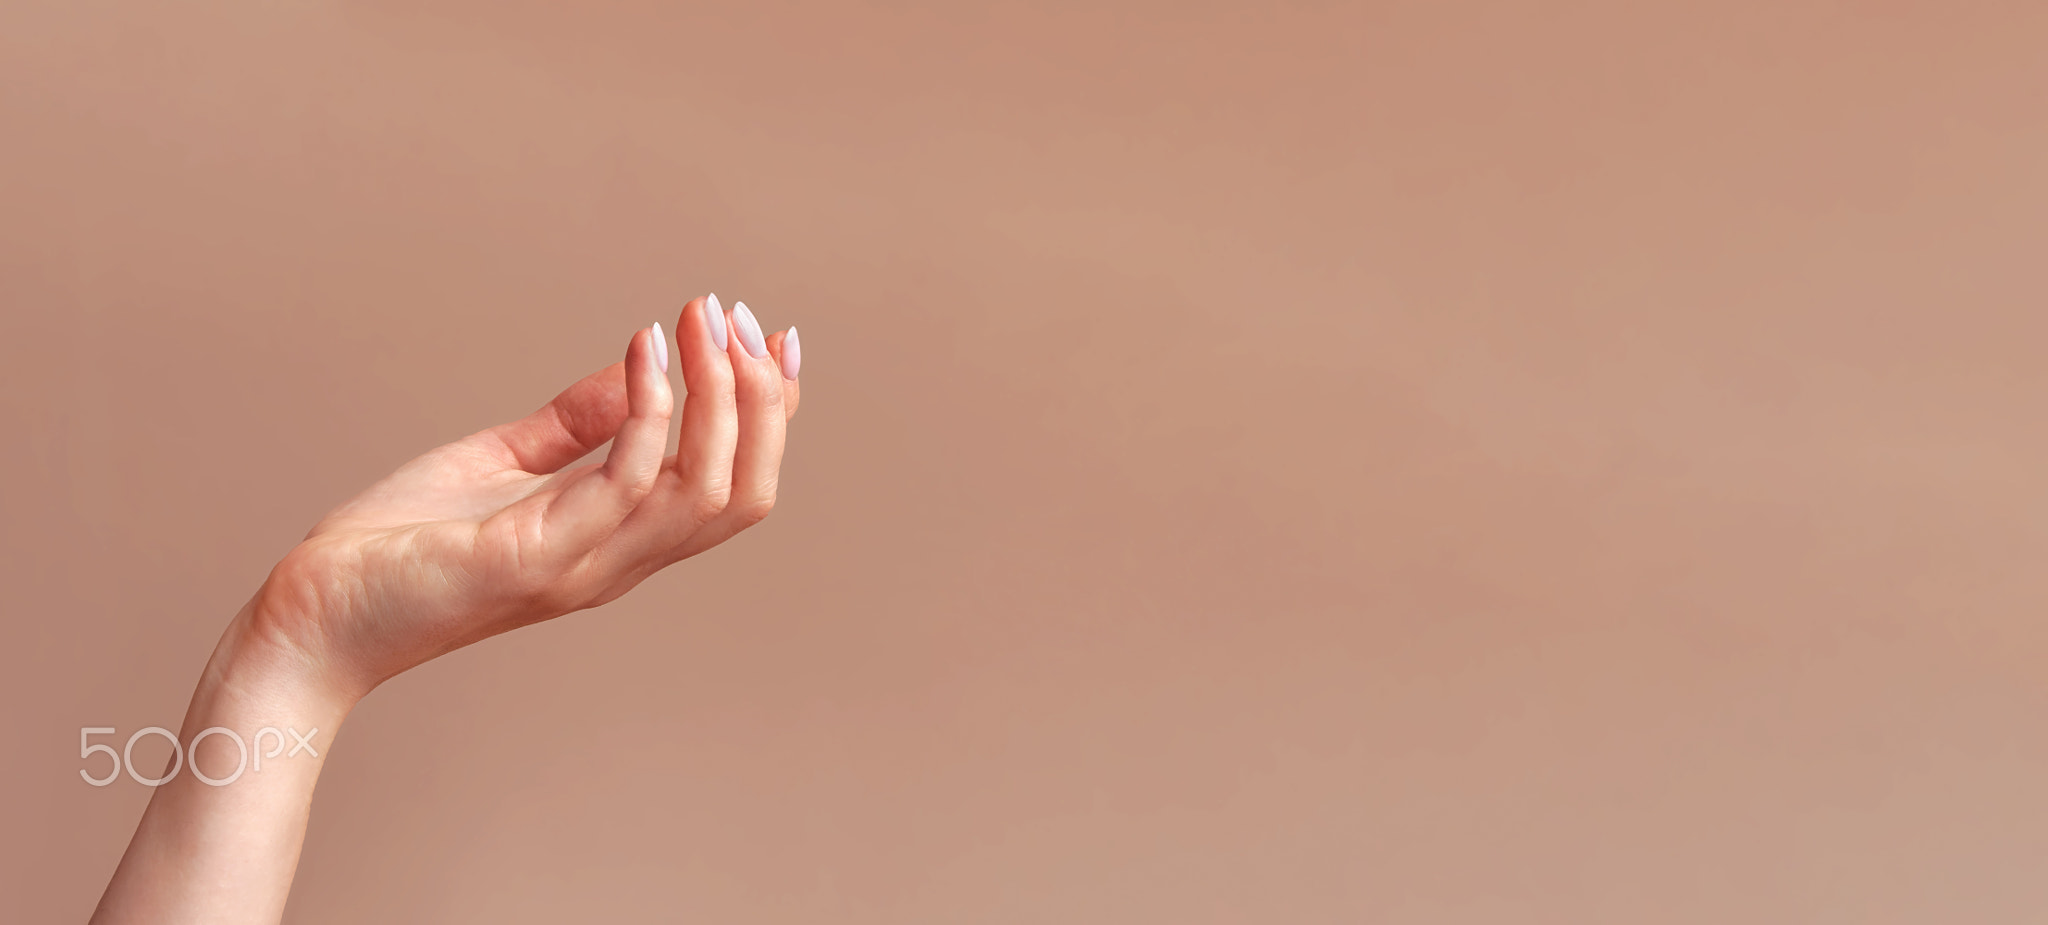 Woman's hand mockup on beige background. Minimalistic natural feminine